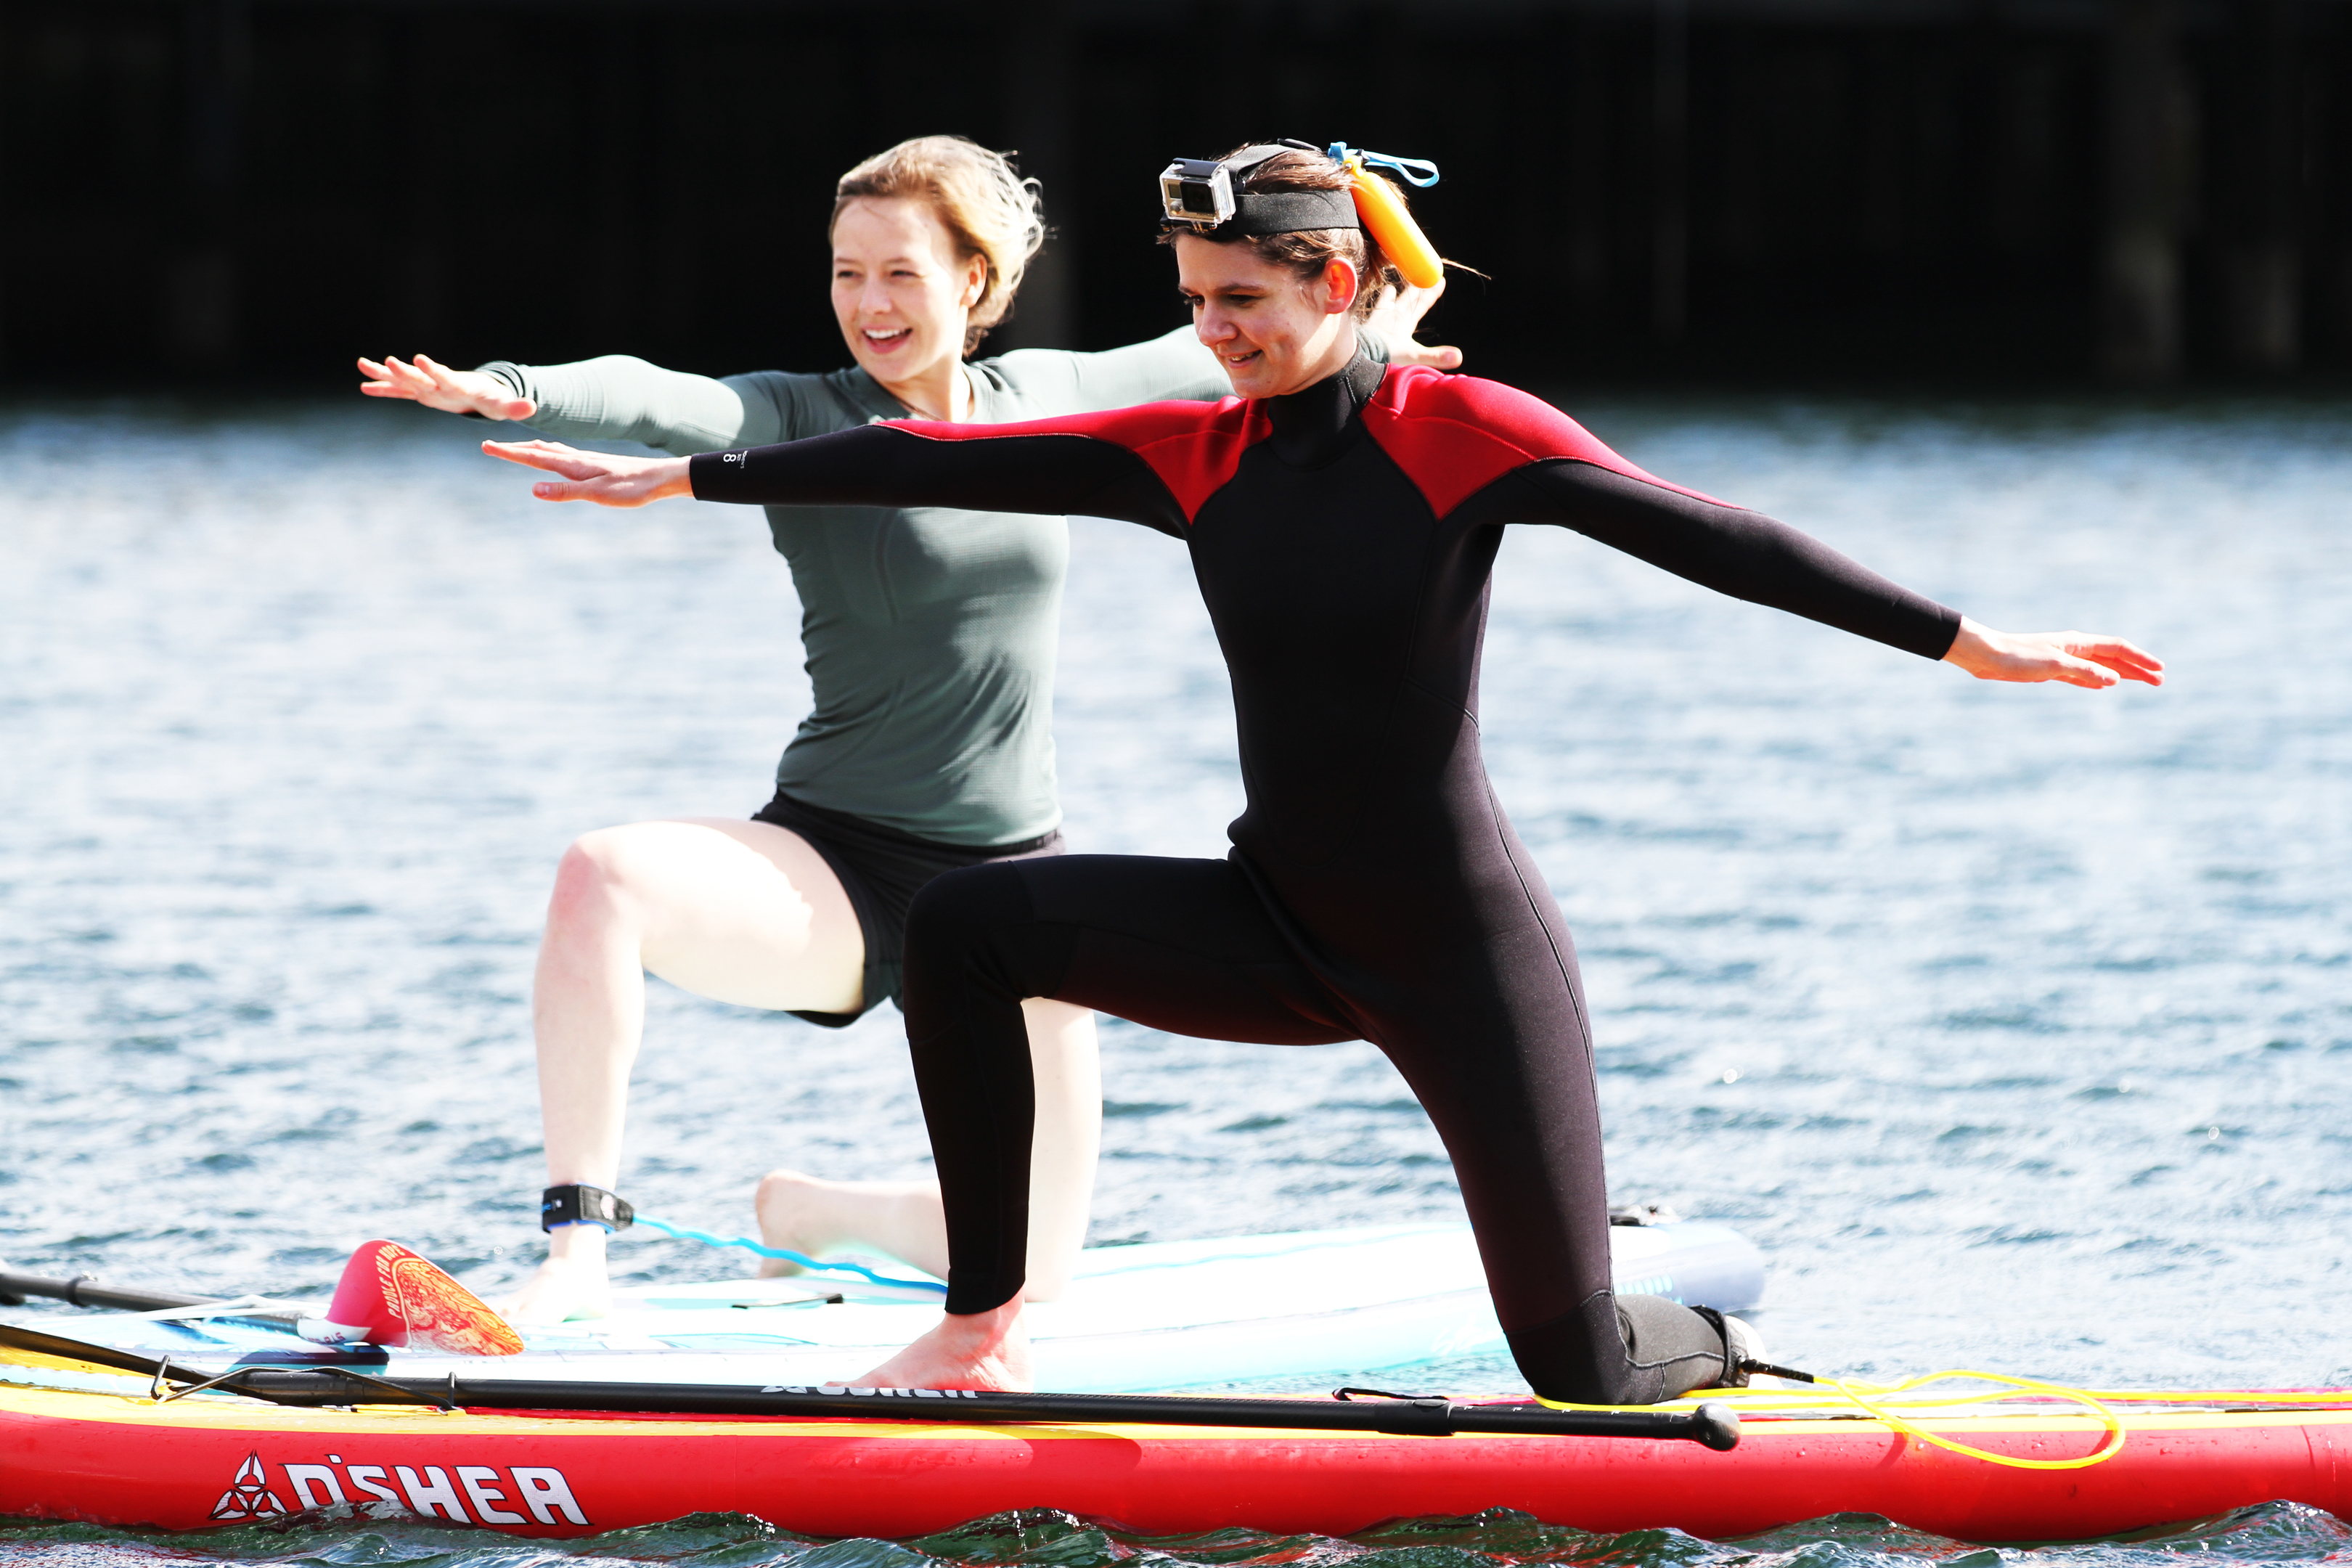 SUP yoga teacher Michaella Robb and Nadia on their paddleboards.